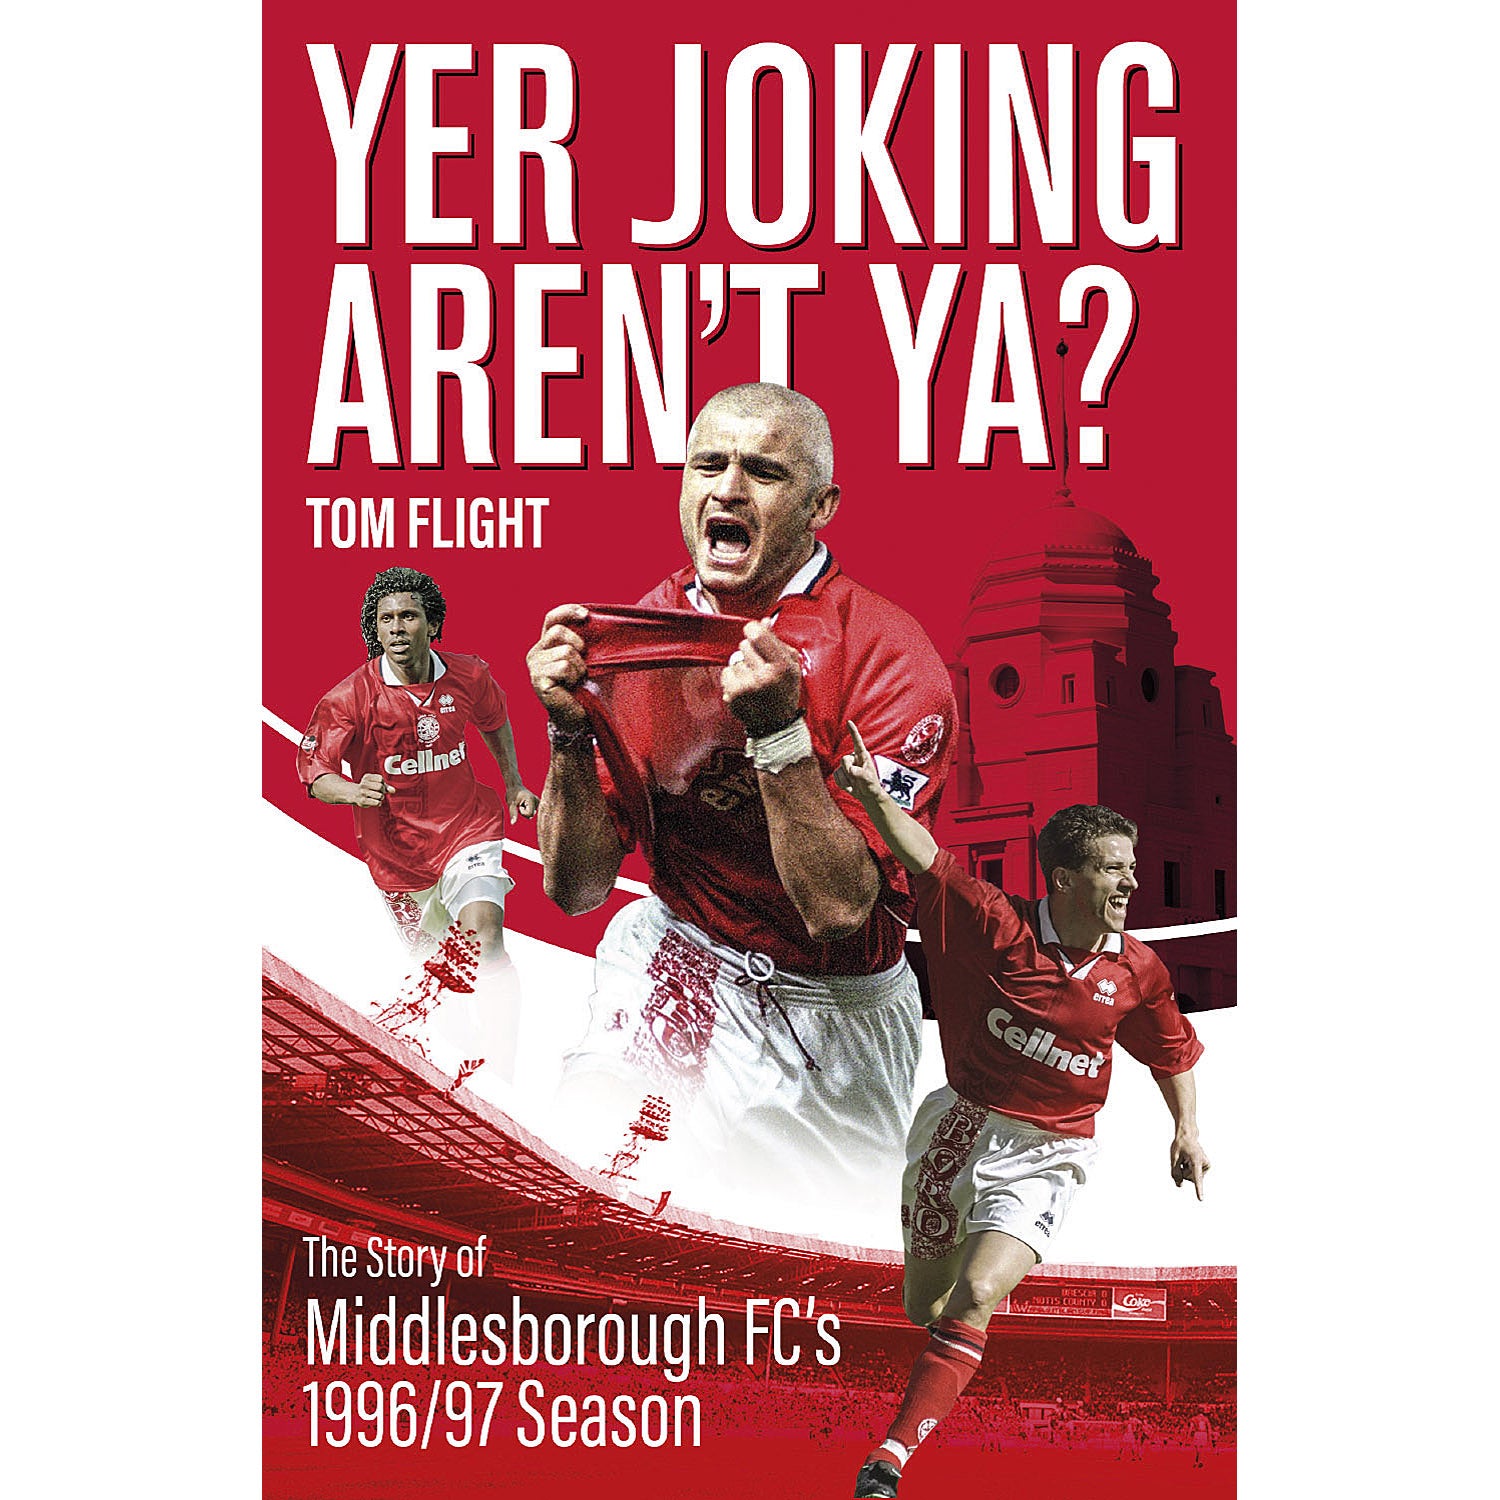 Yer Joking Aren't Ya? The Story of Middlesbrough FC's 1996/97 Season